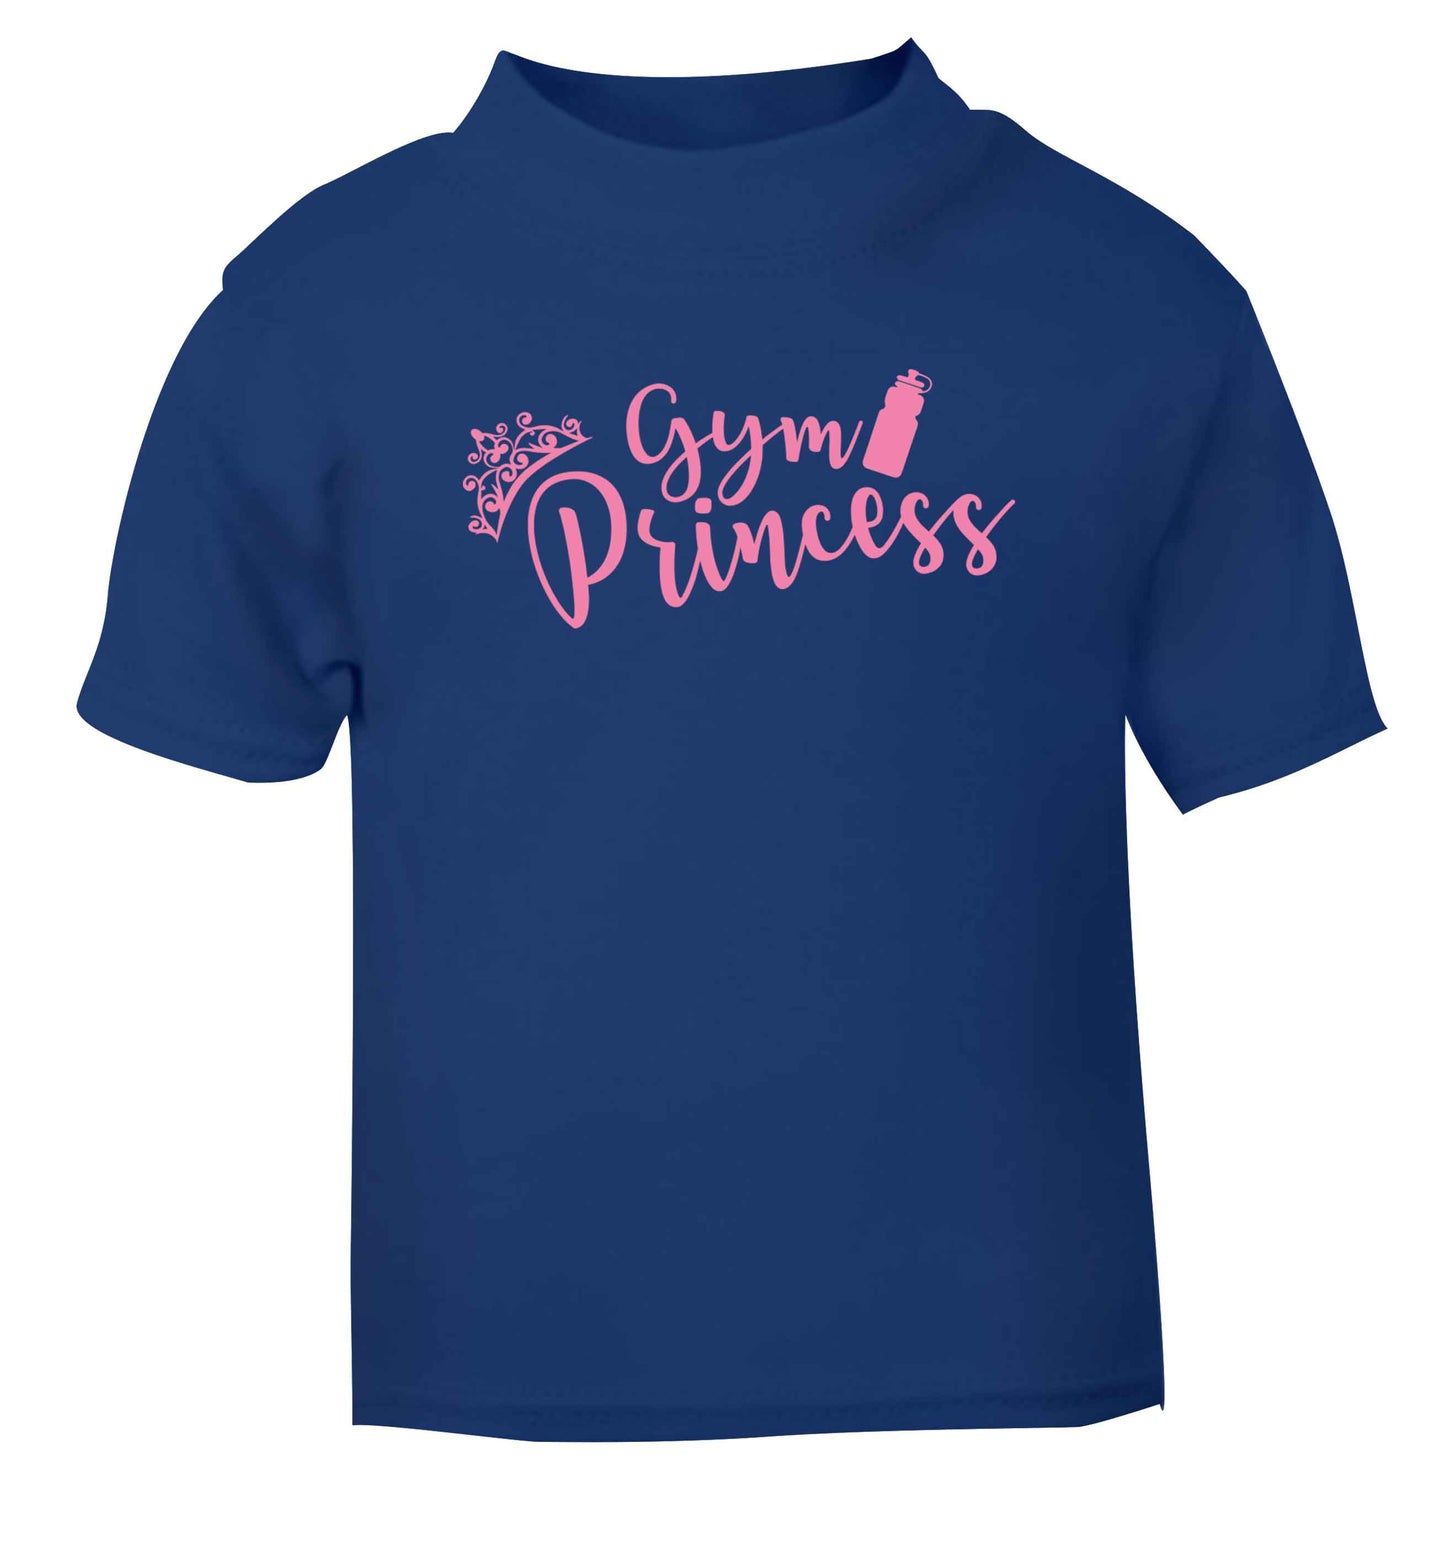 Gym princess blue Baby Toddler Tshirt 2 Years